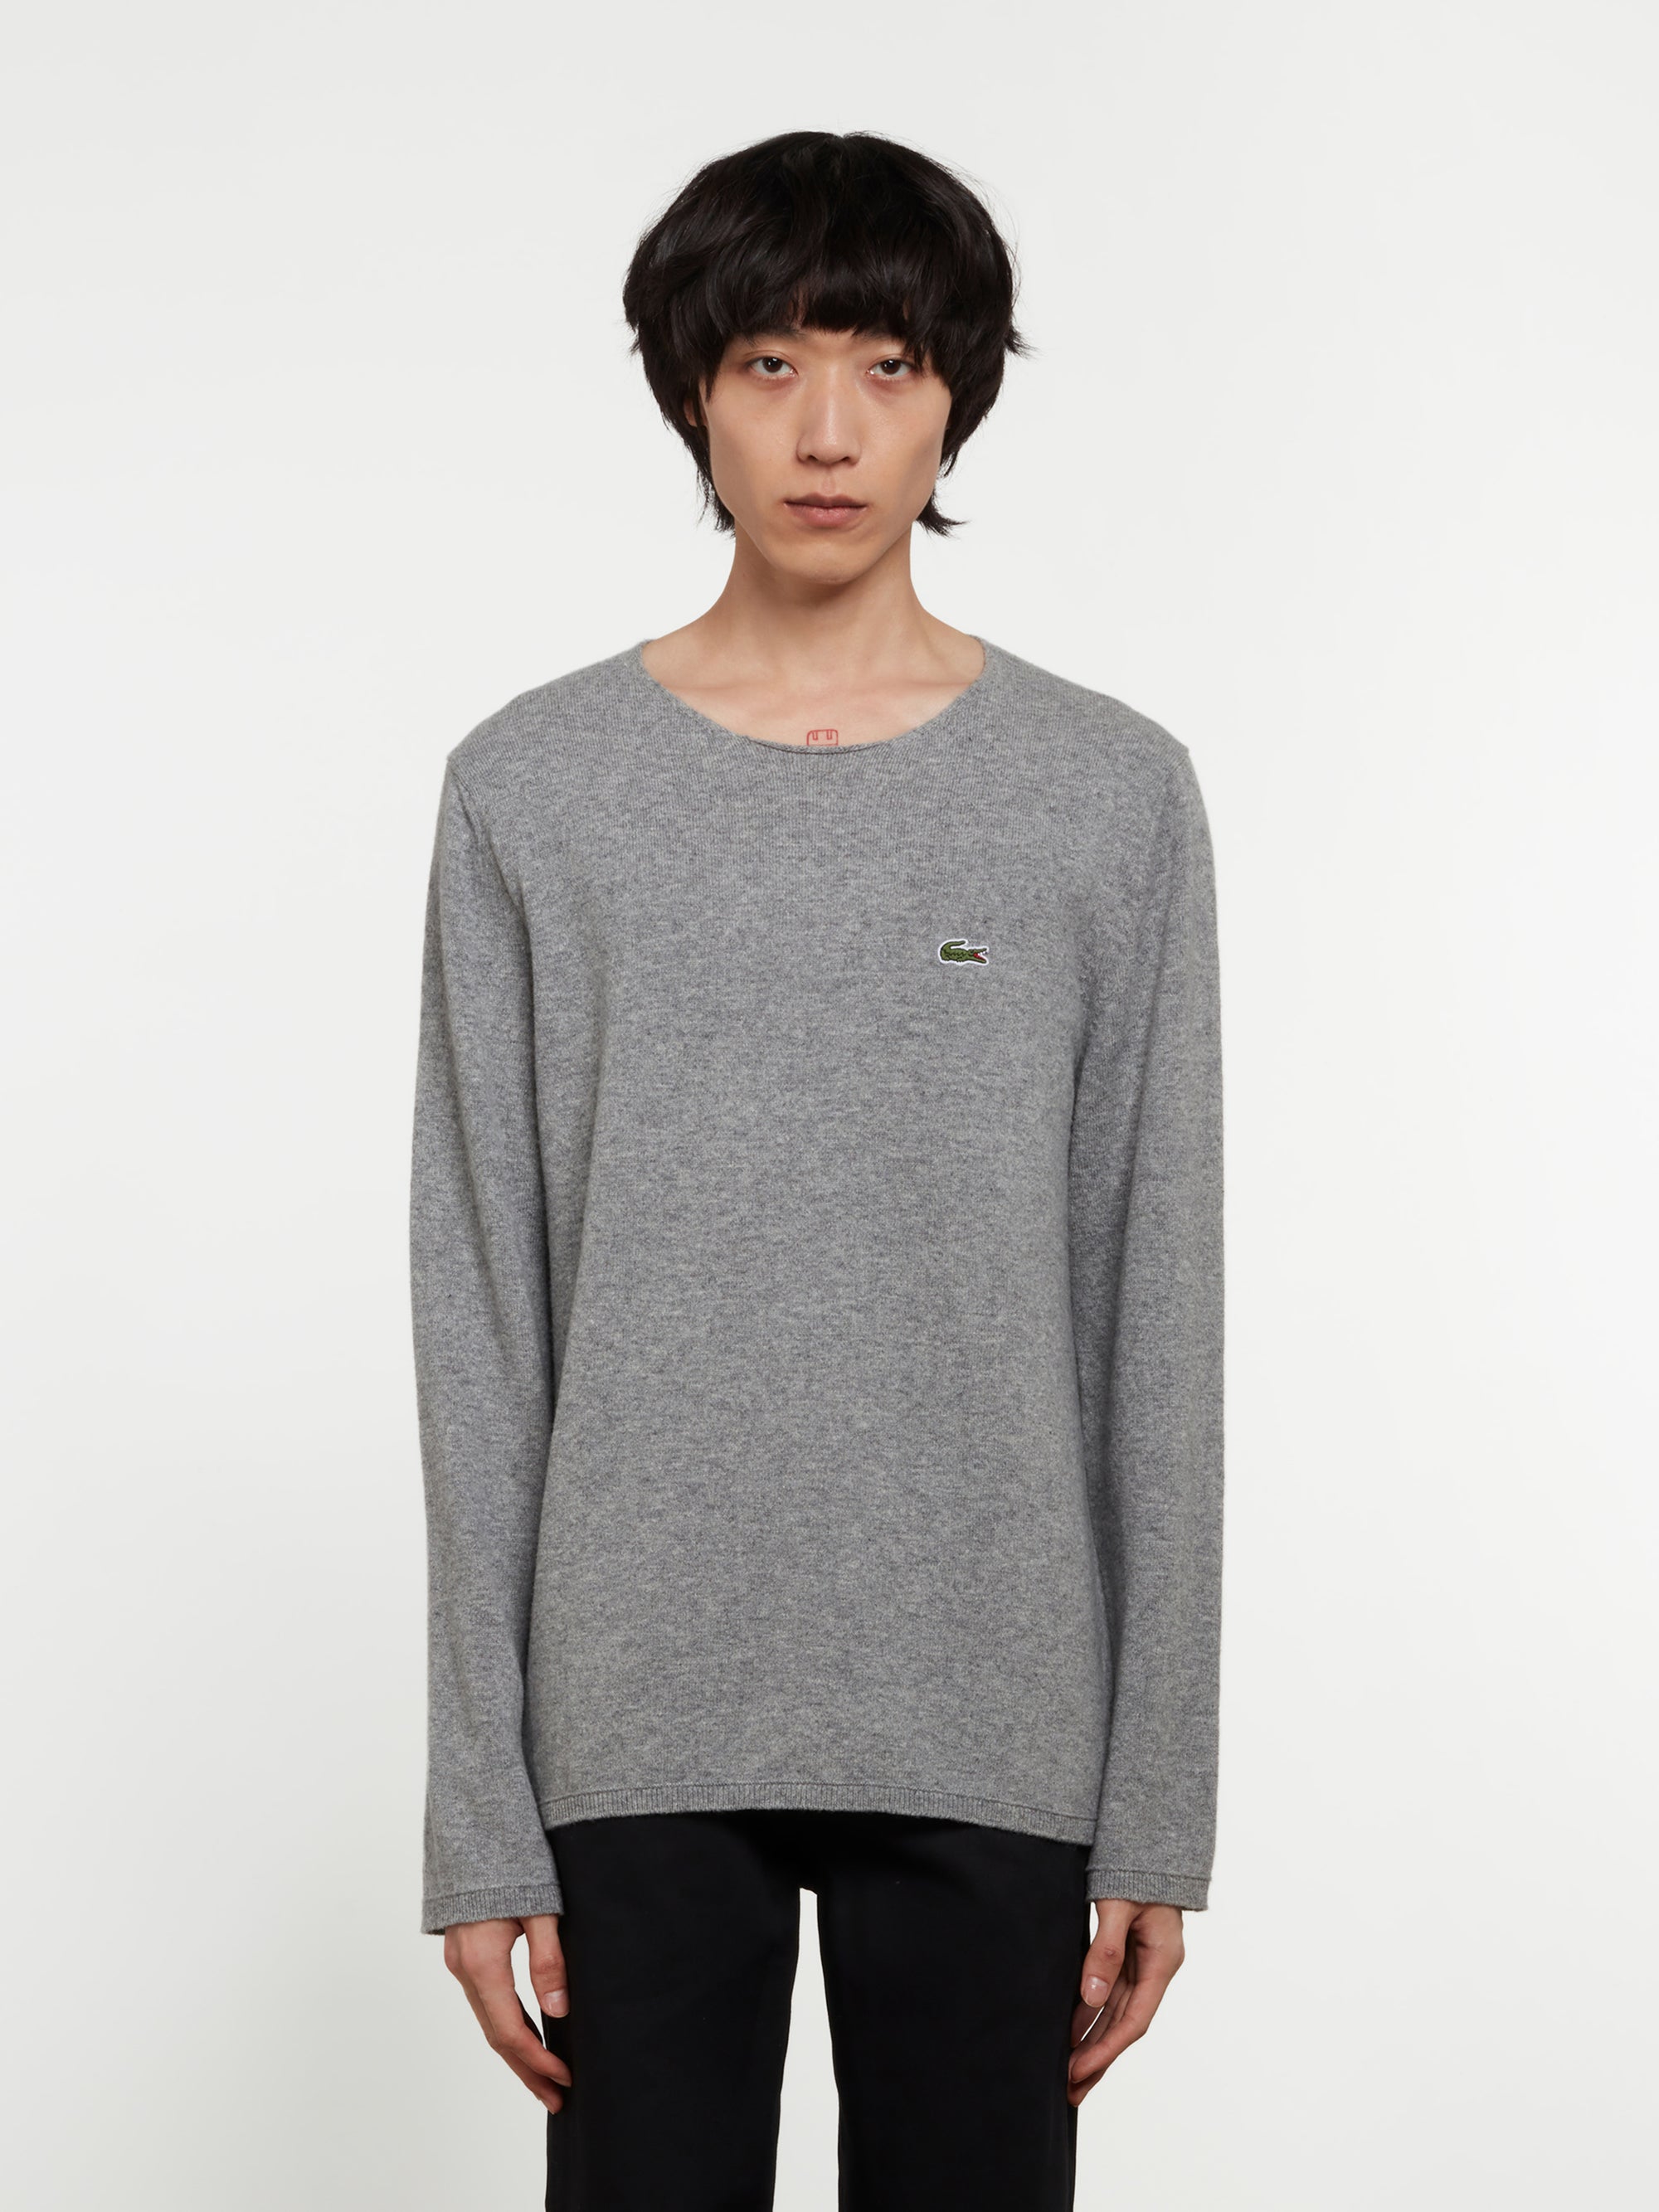 CDG Shirt - Lacoste Men’s Sweater - (Grey) view 1